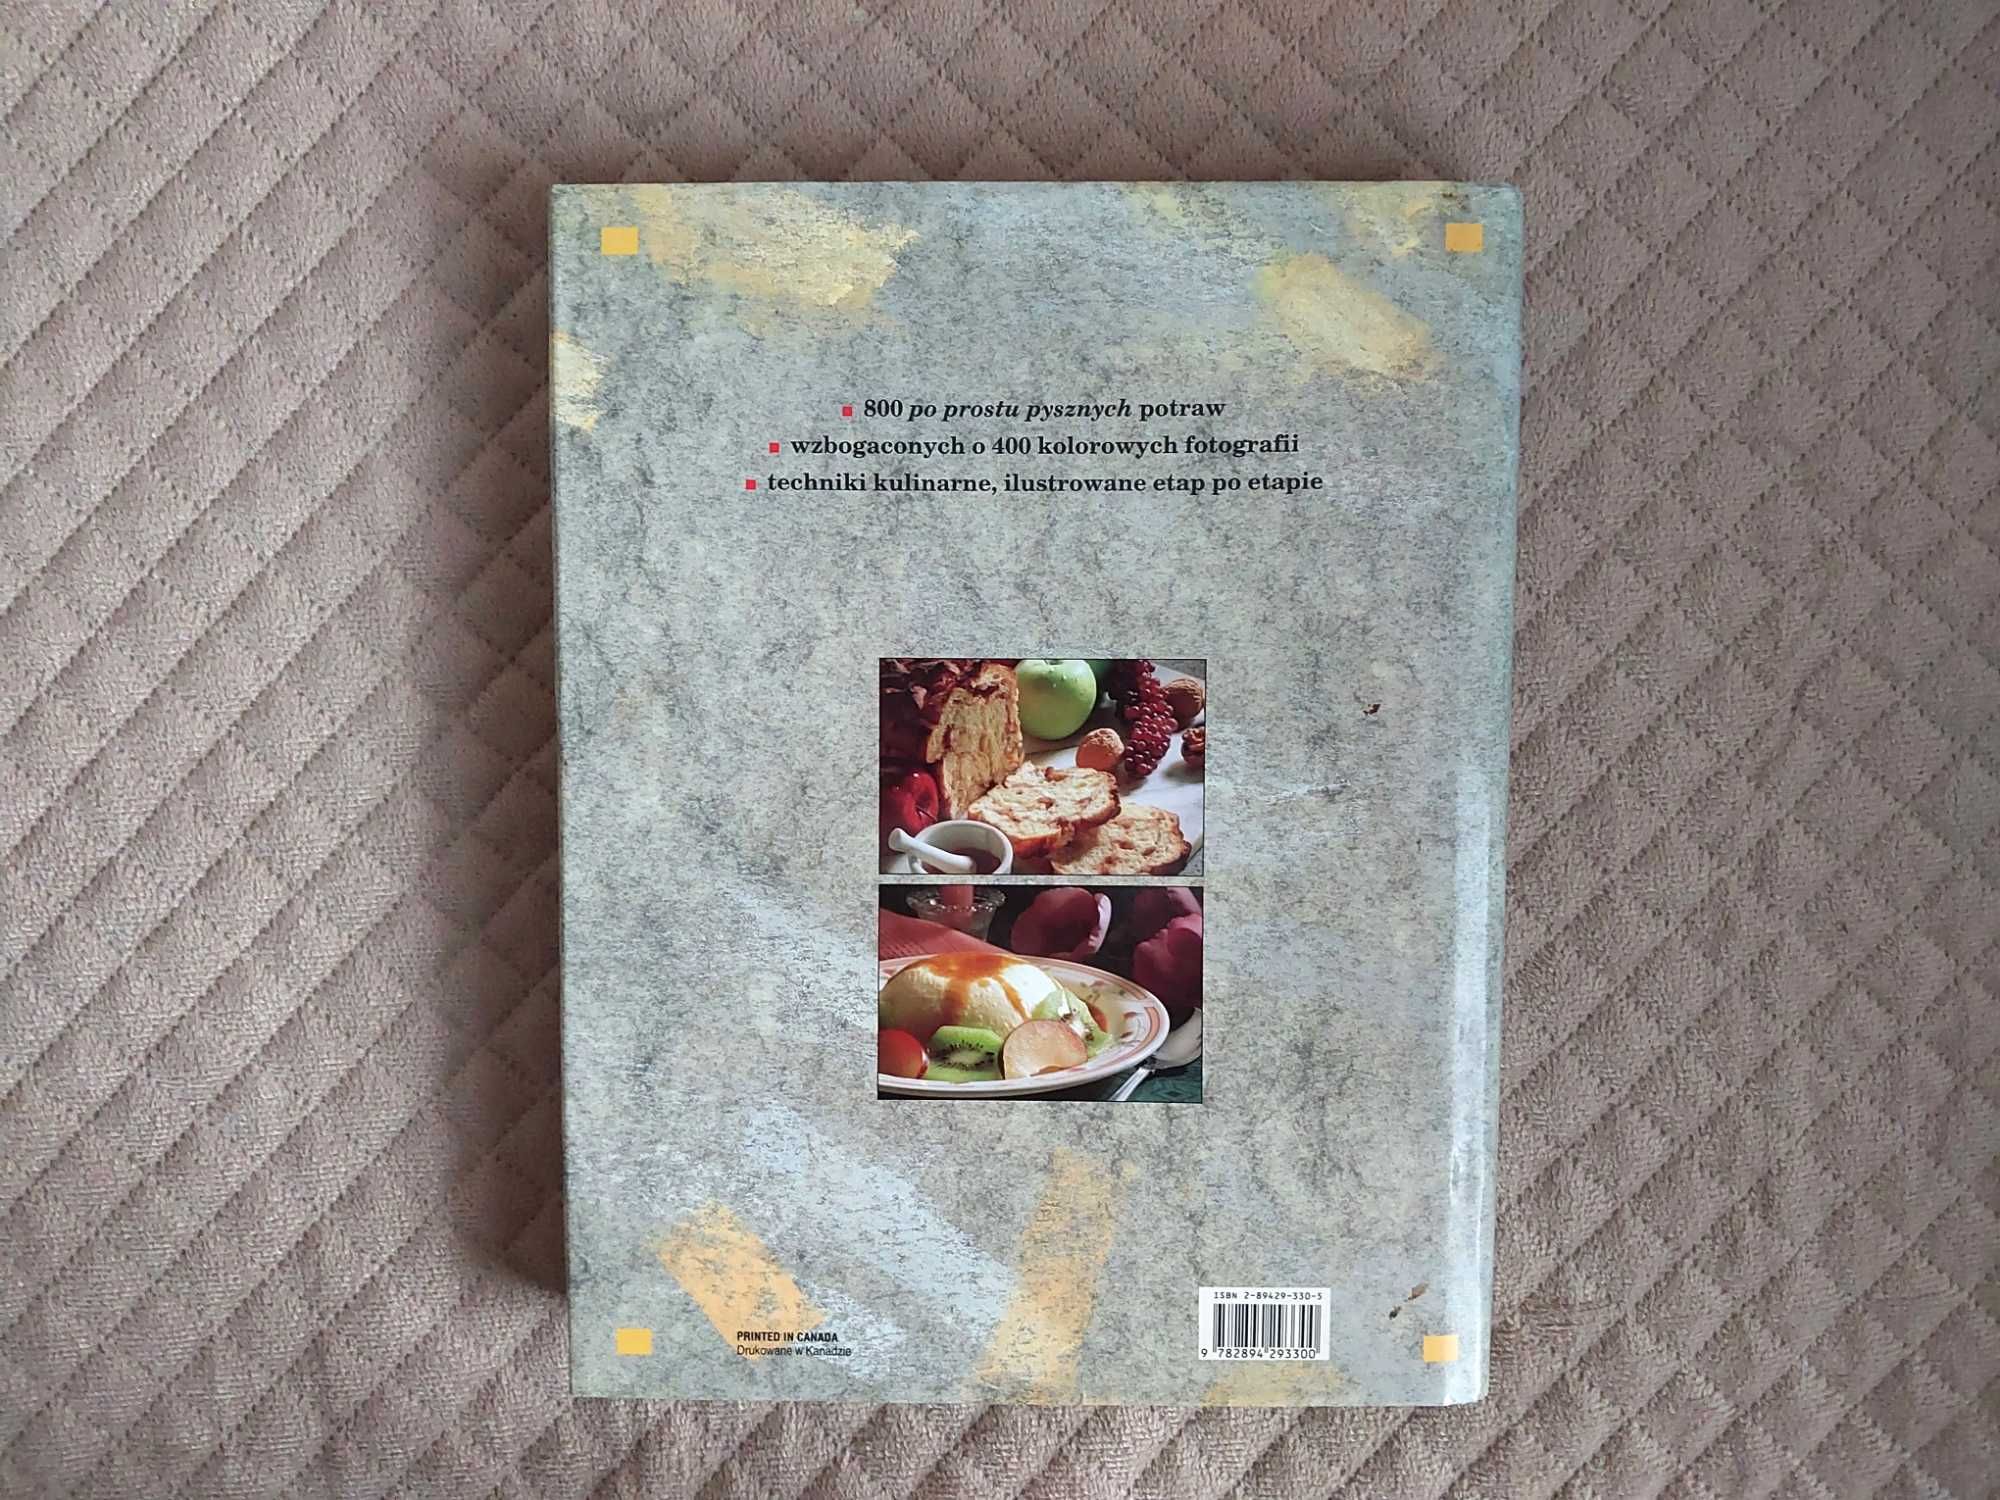 Po prostu pyszne - książka kulinarna